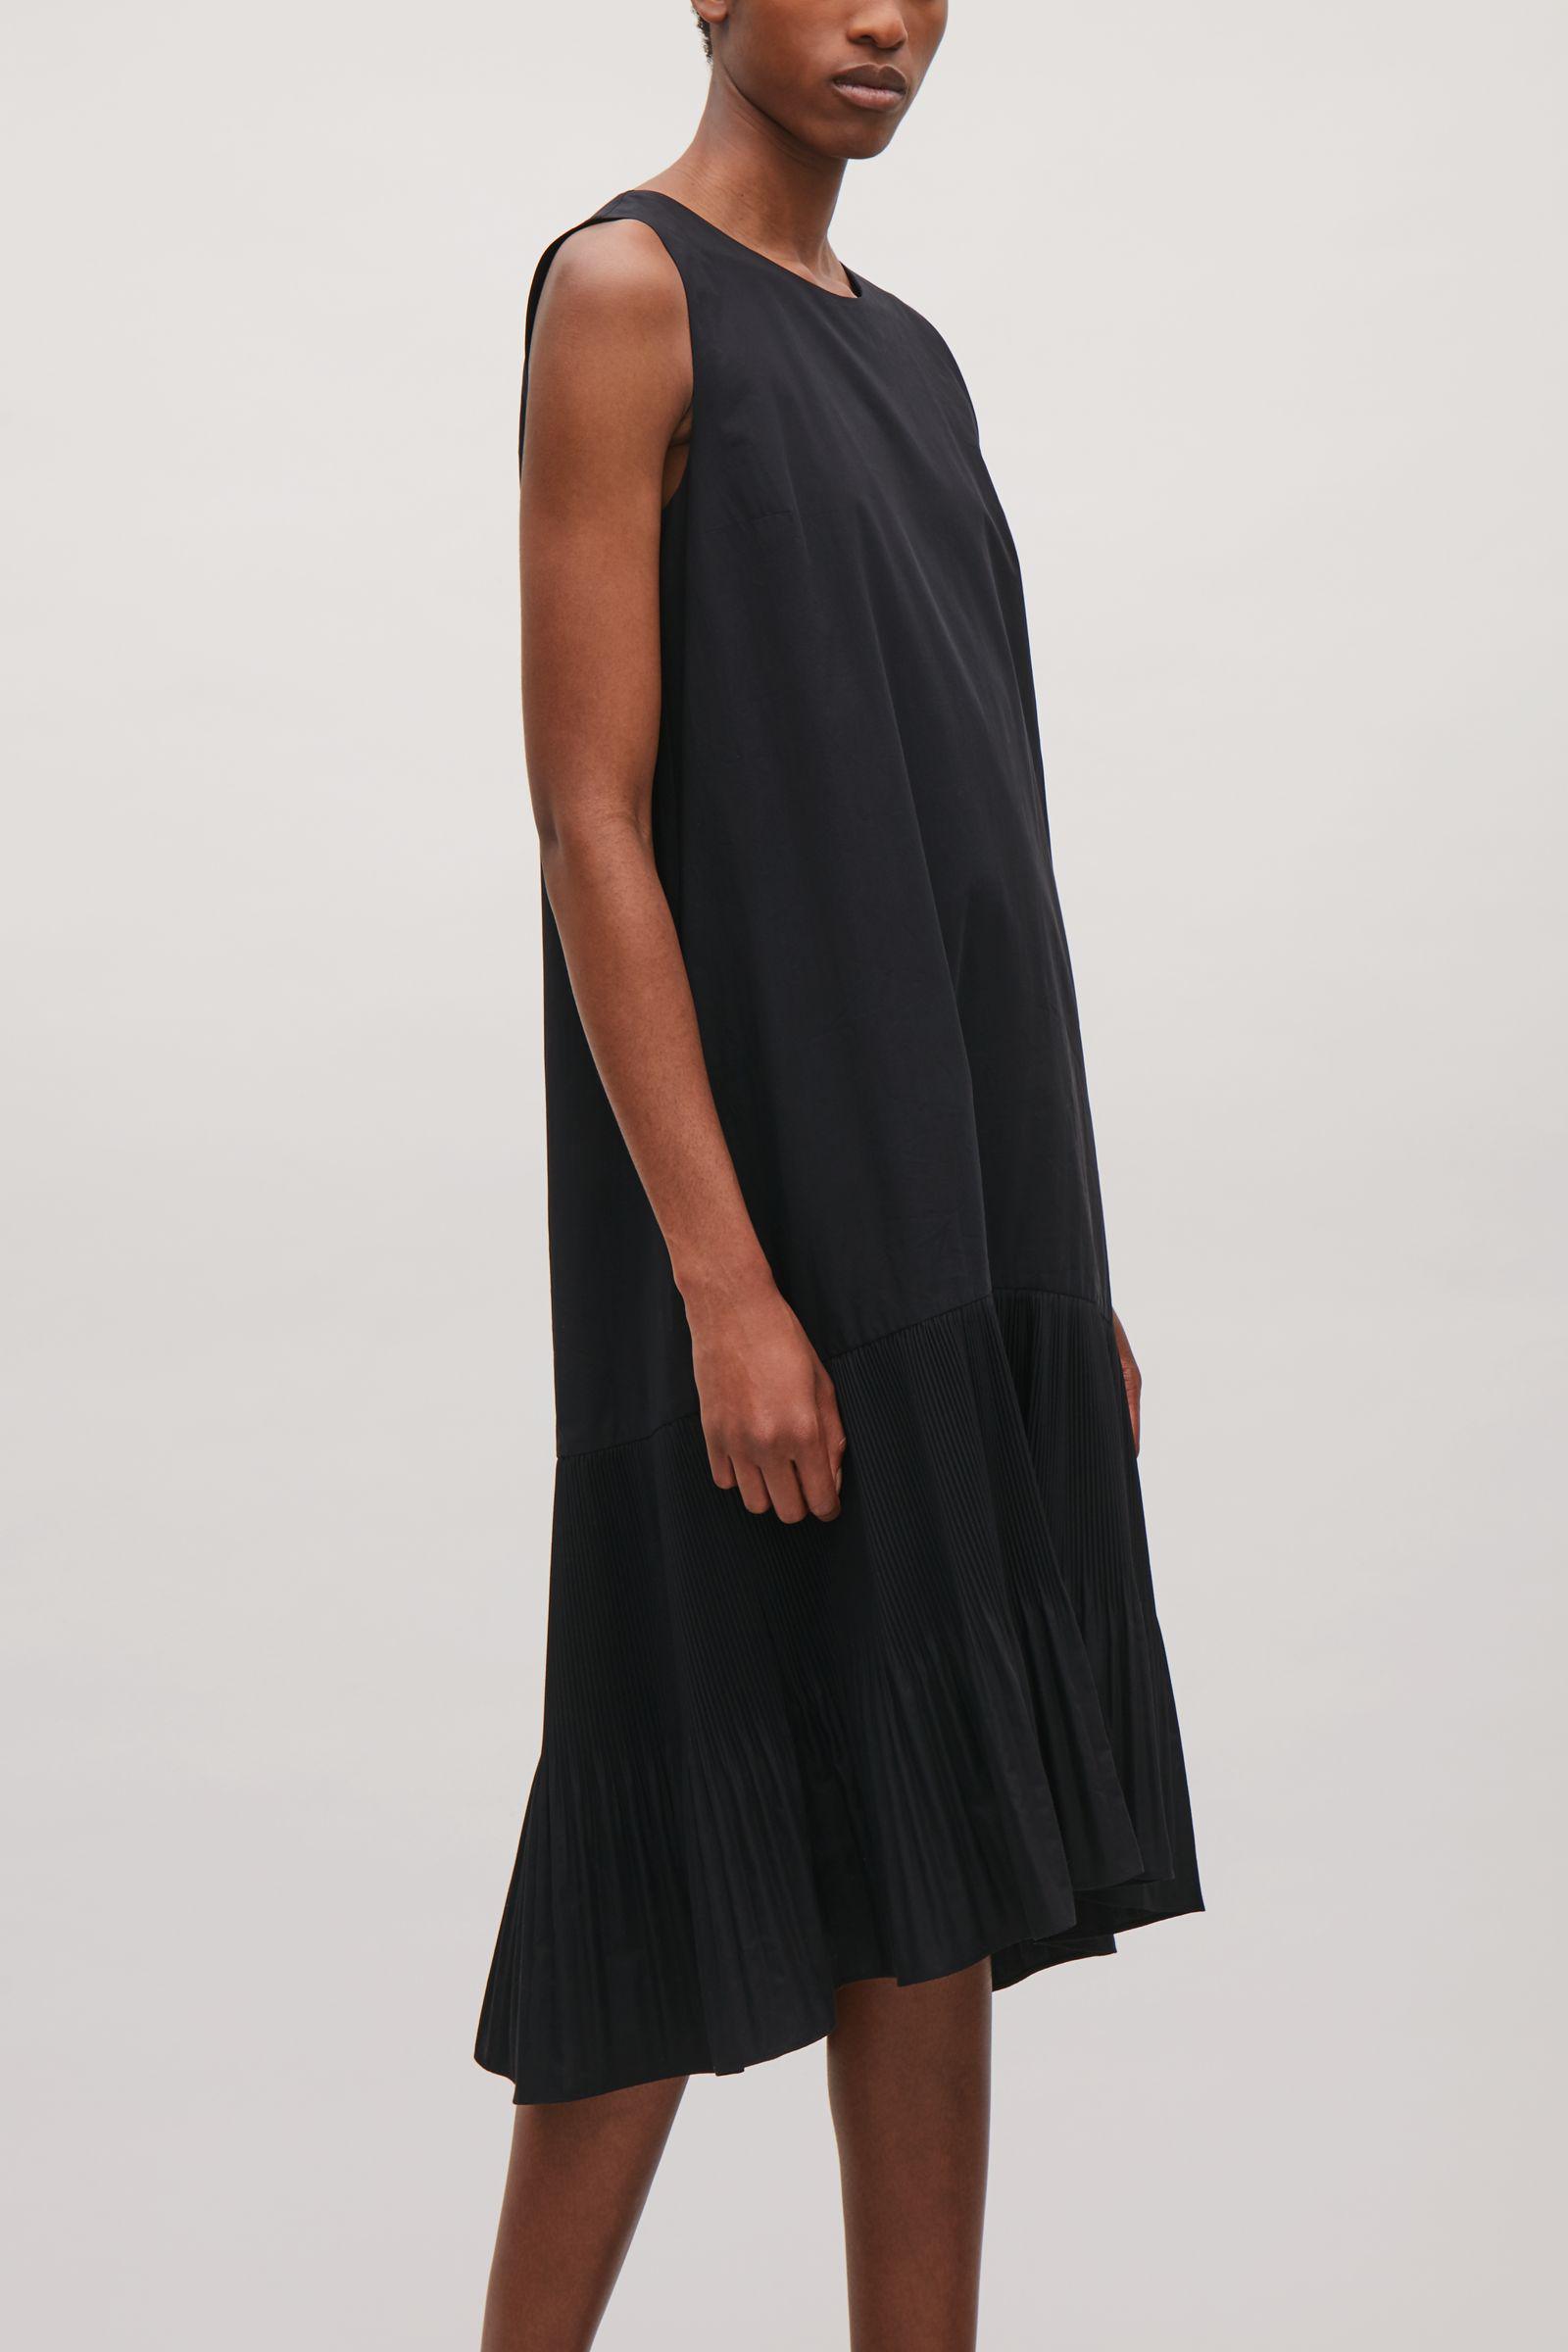 COS Cotton Voluminous Pleat Dress in Black - Lyst